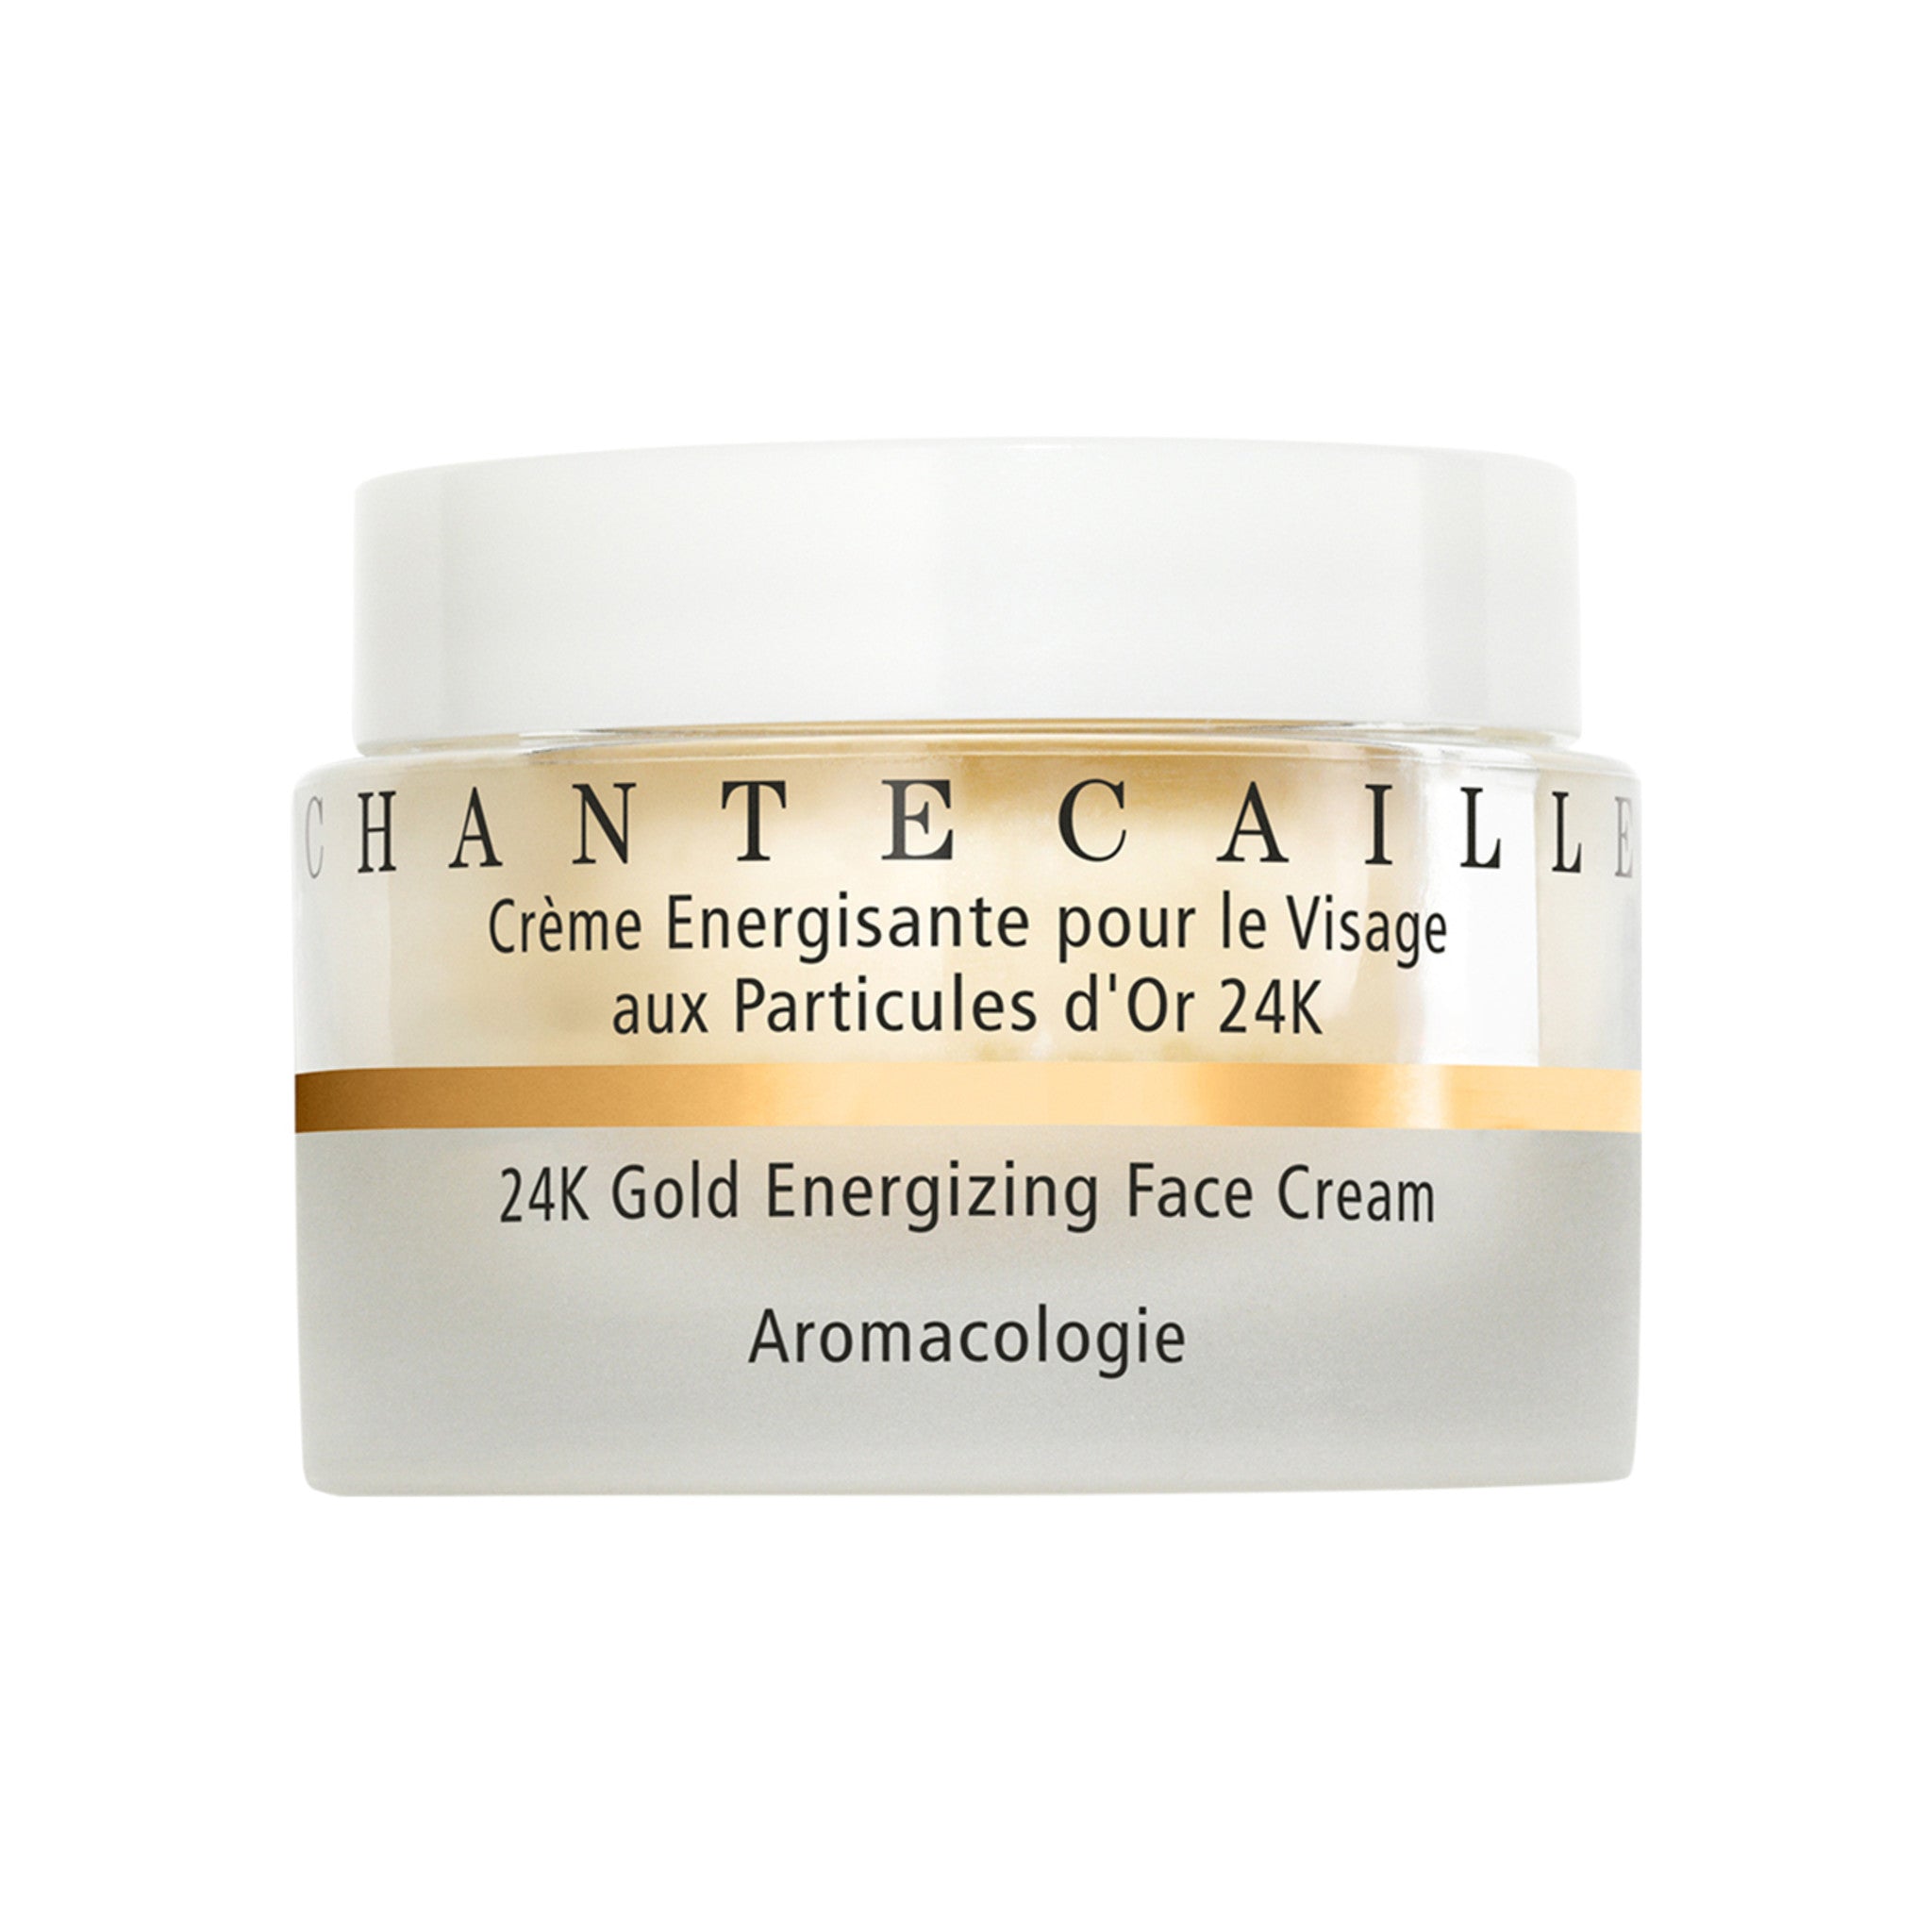 Chantecaille 24K Gold Energizing Face Cream main image.